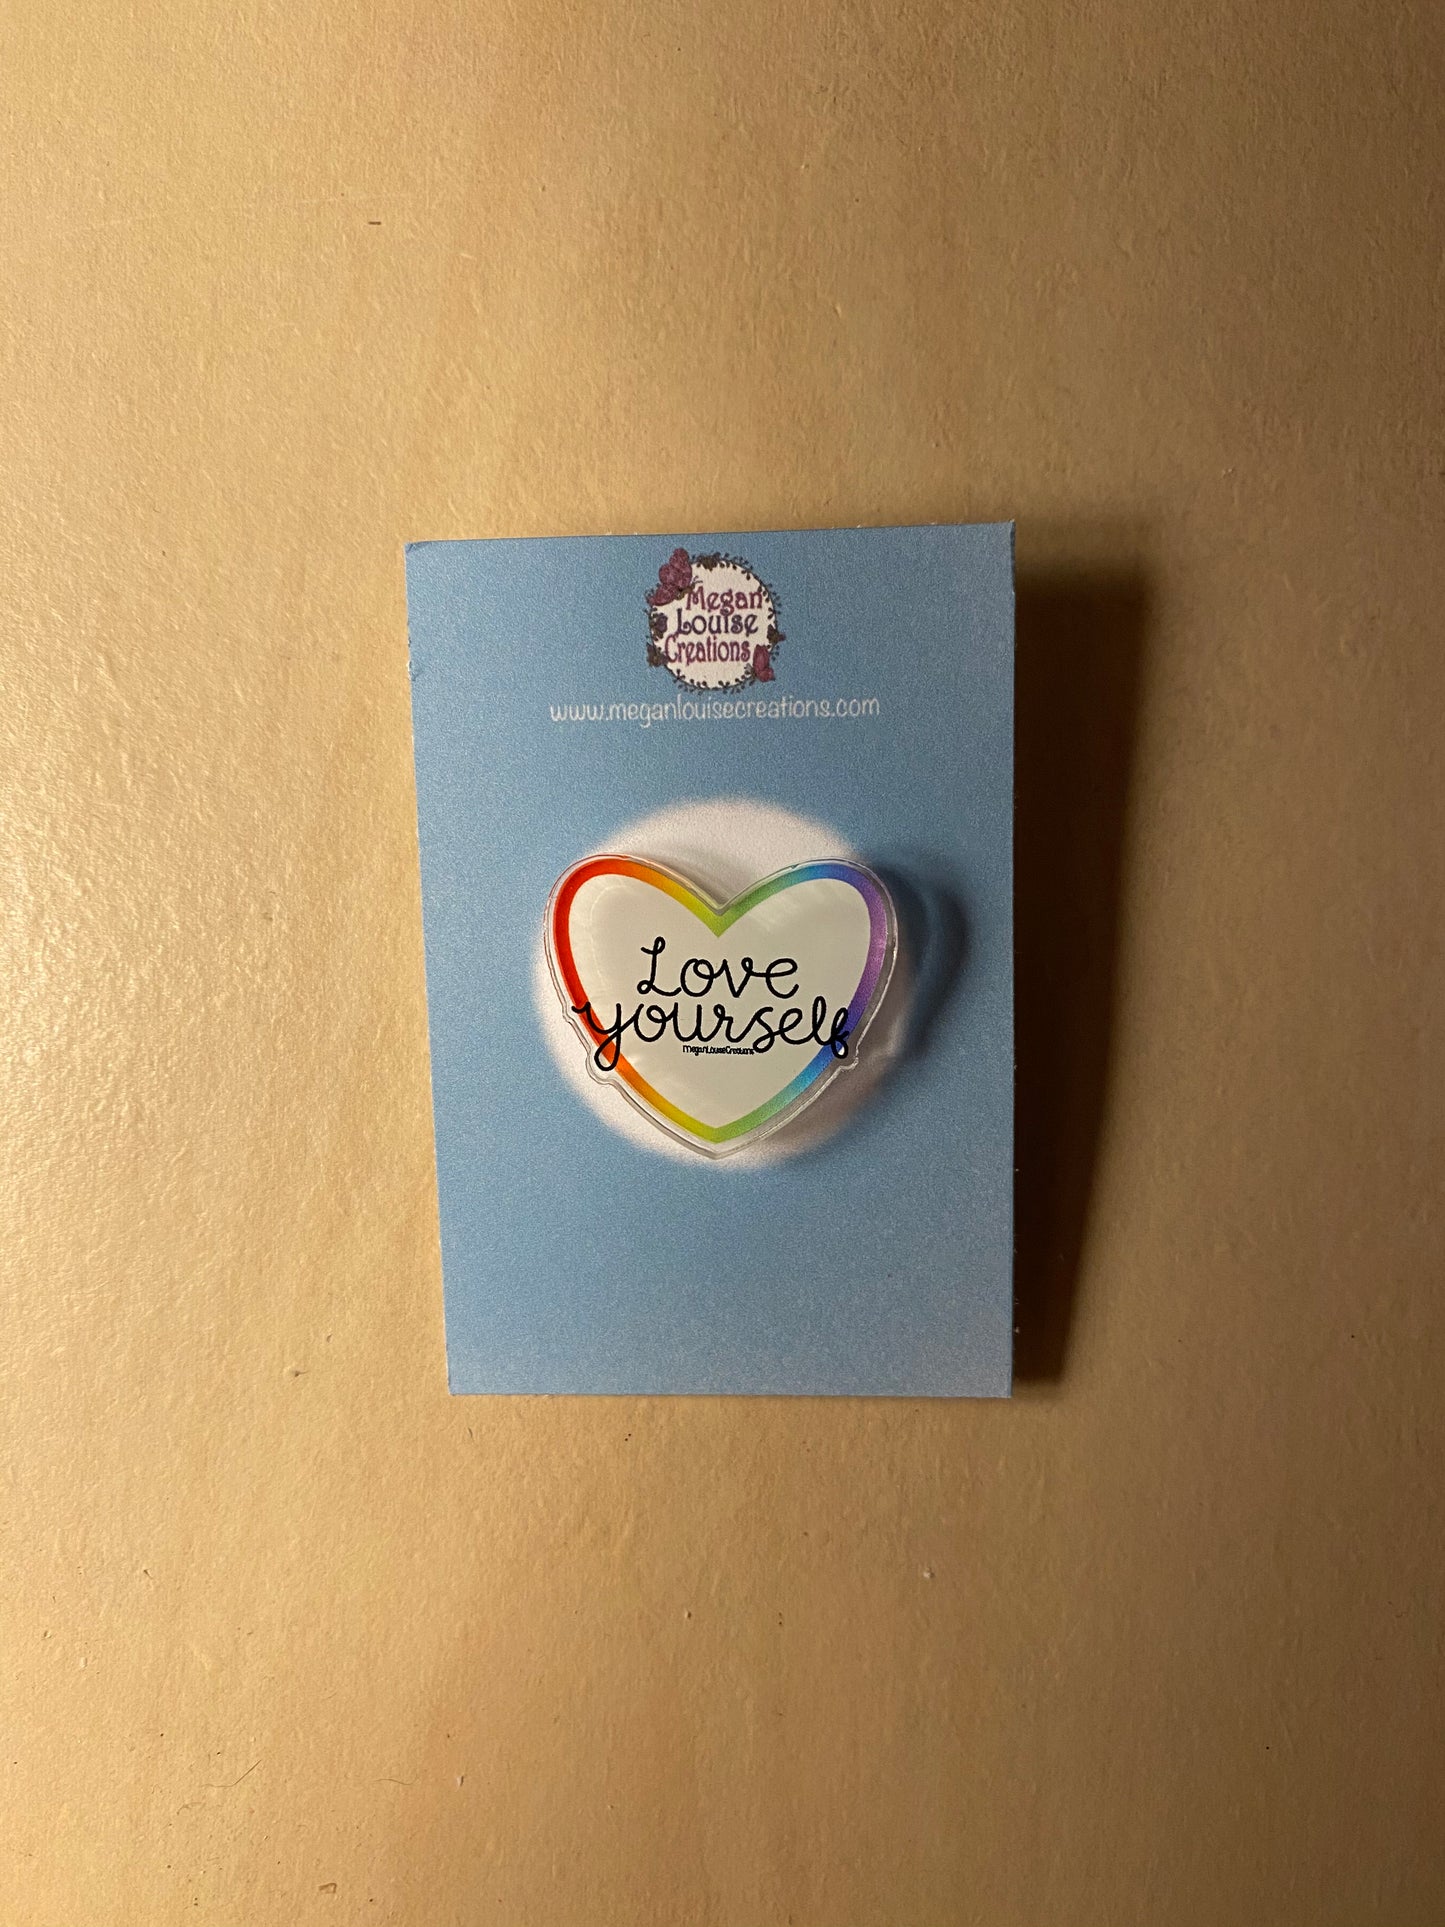 Love yourself pin badge